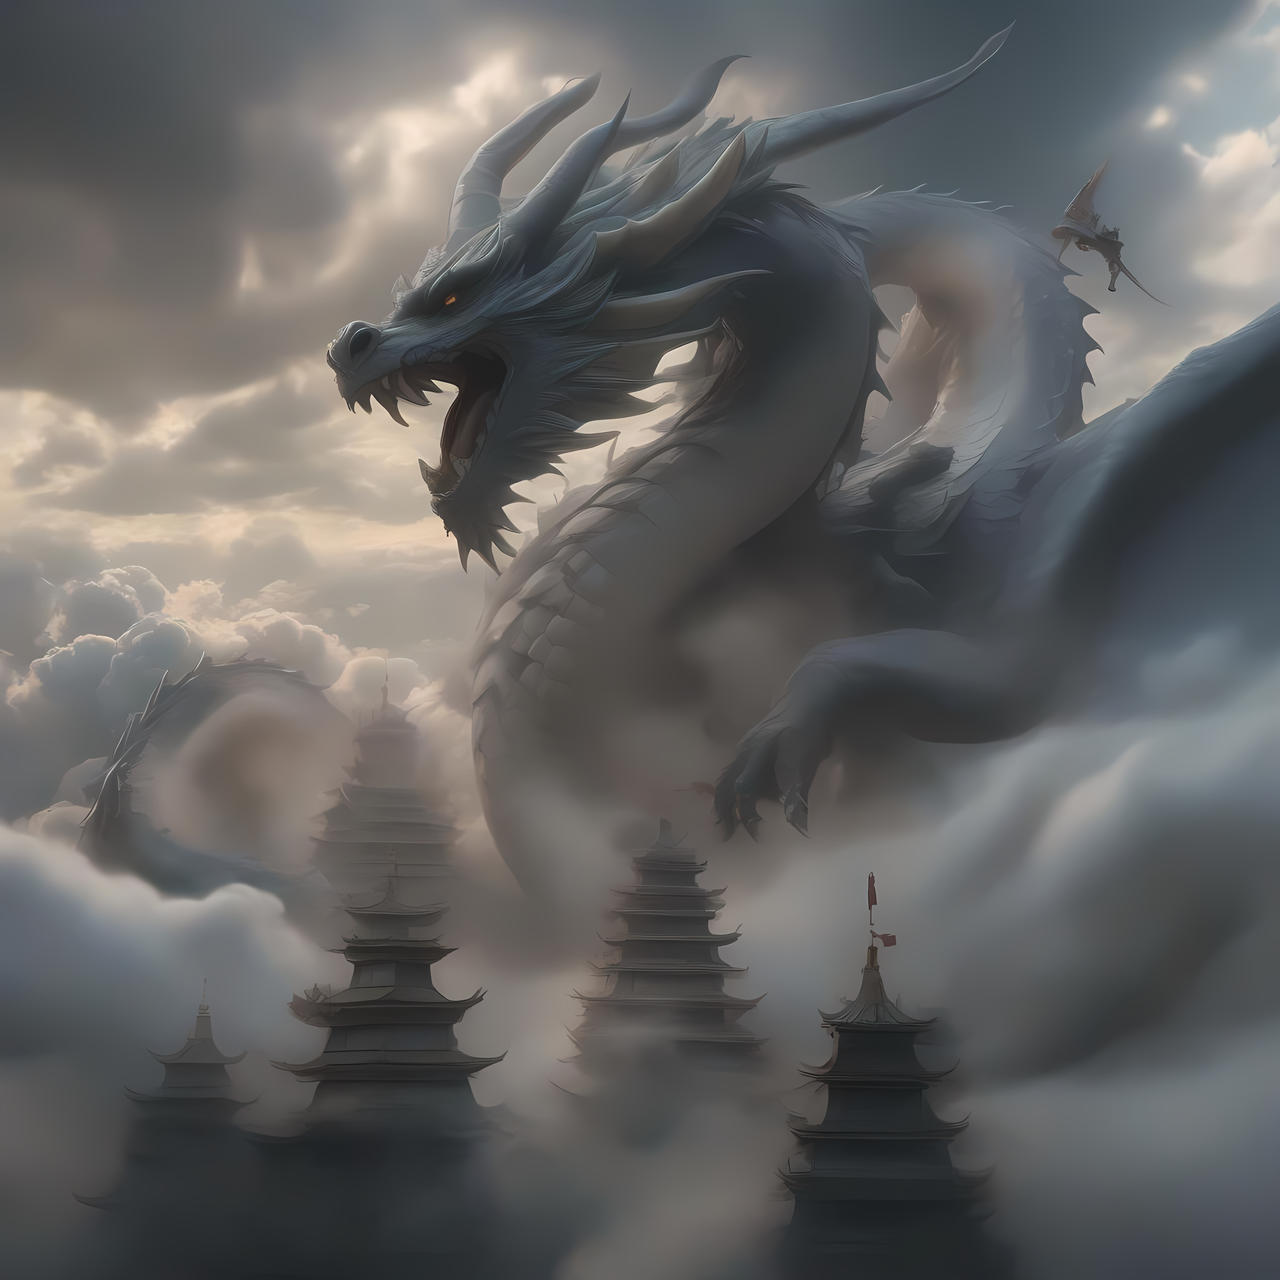 New 3D dragon by Dragonio3 on DeviantArt